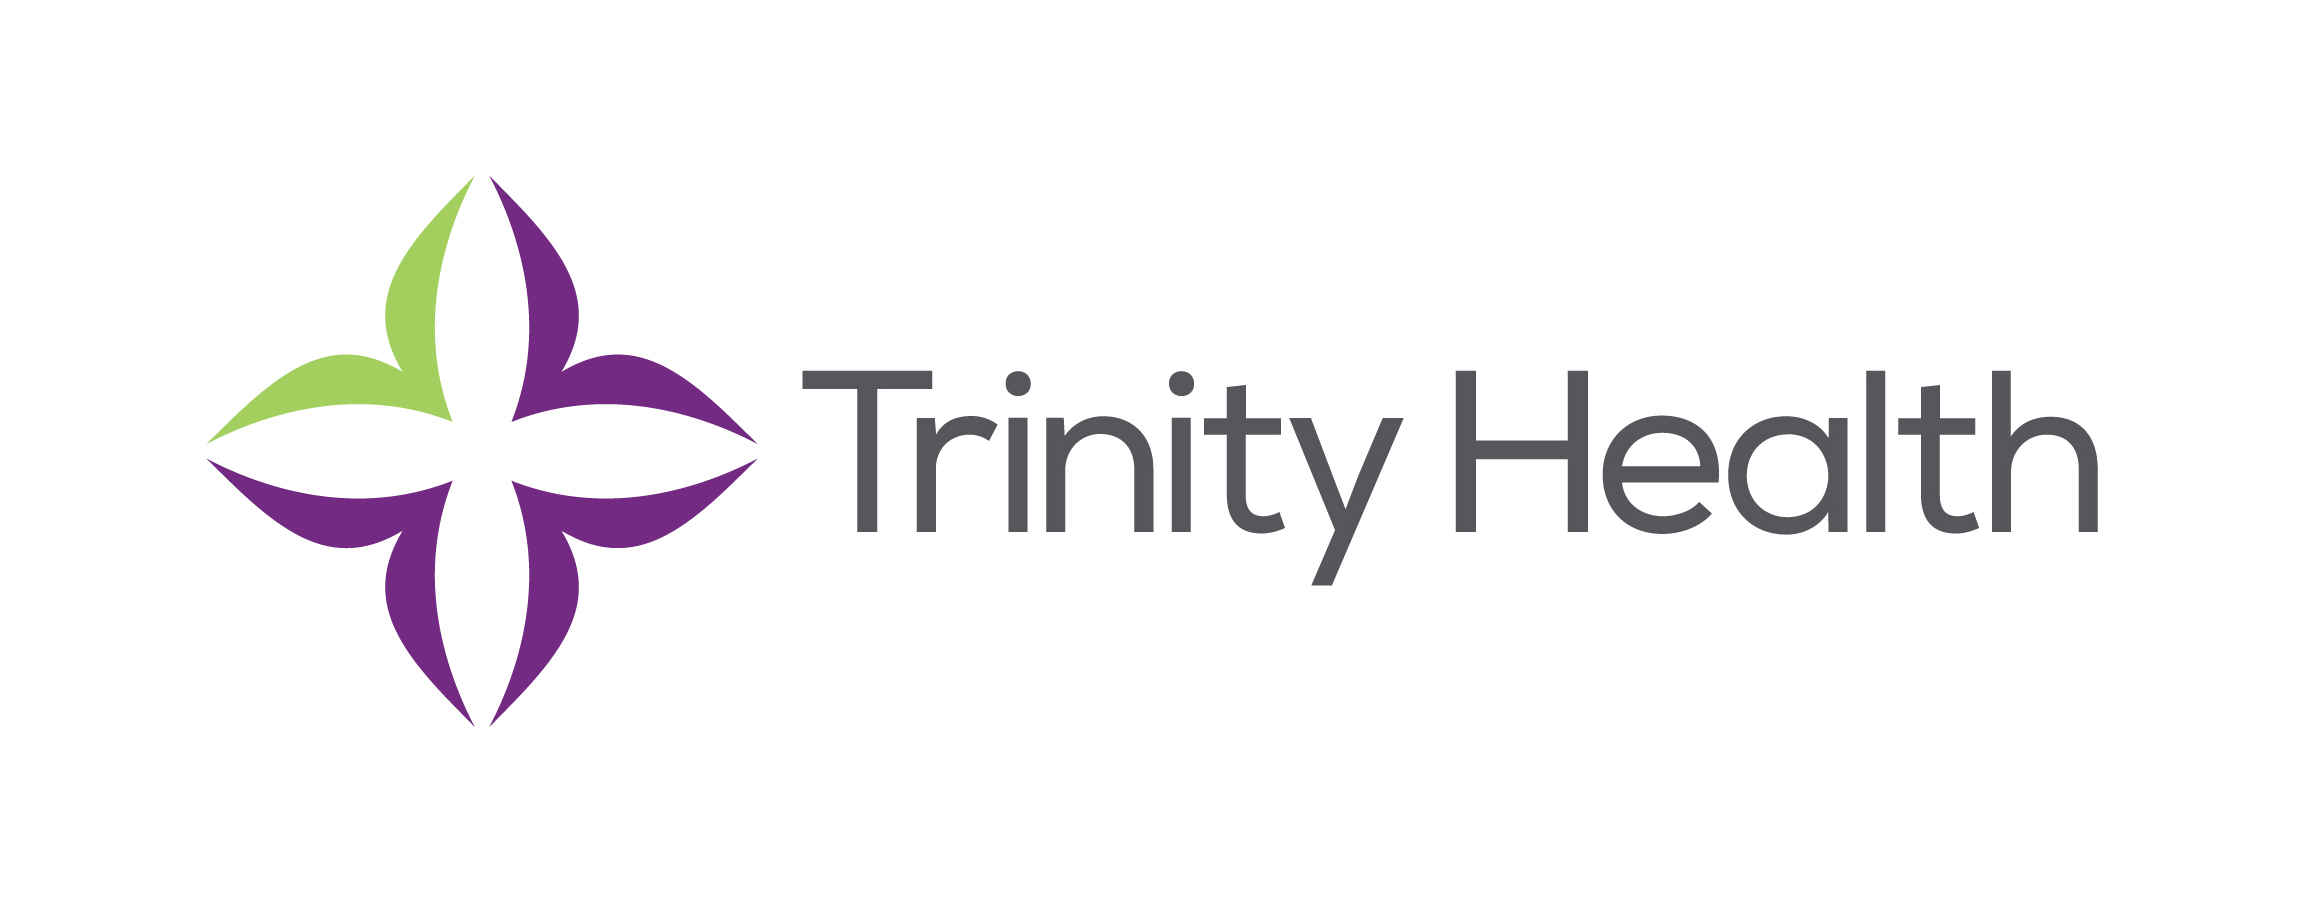 8 Metro Detroit hospitals join Trinity Health Michigan's rebrand